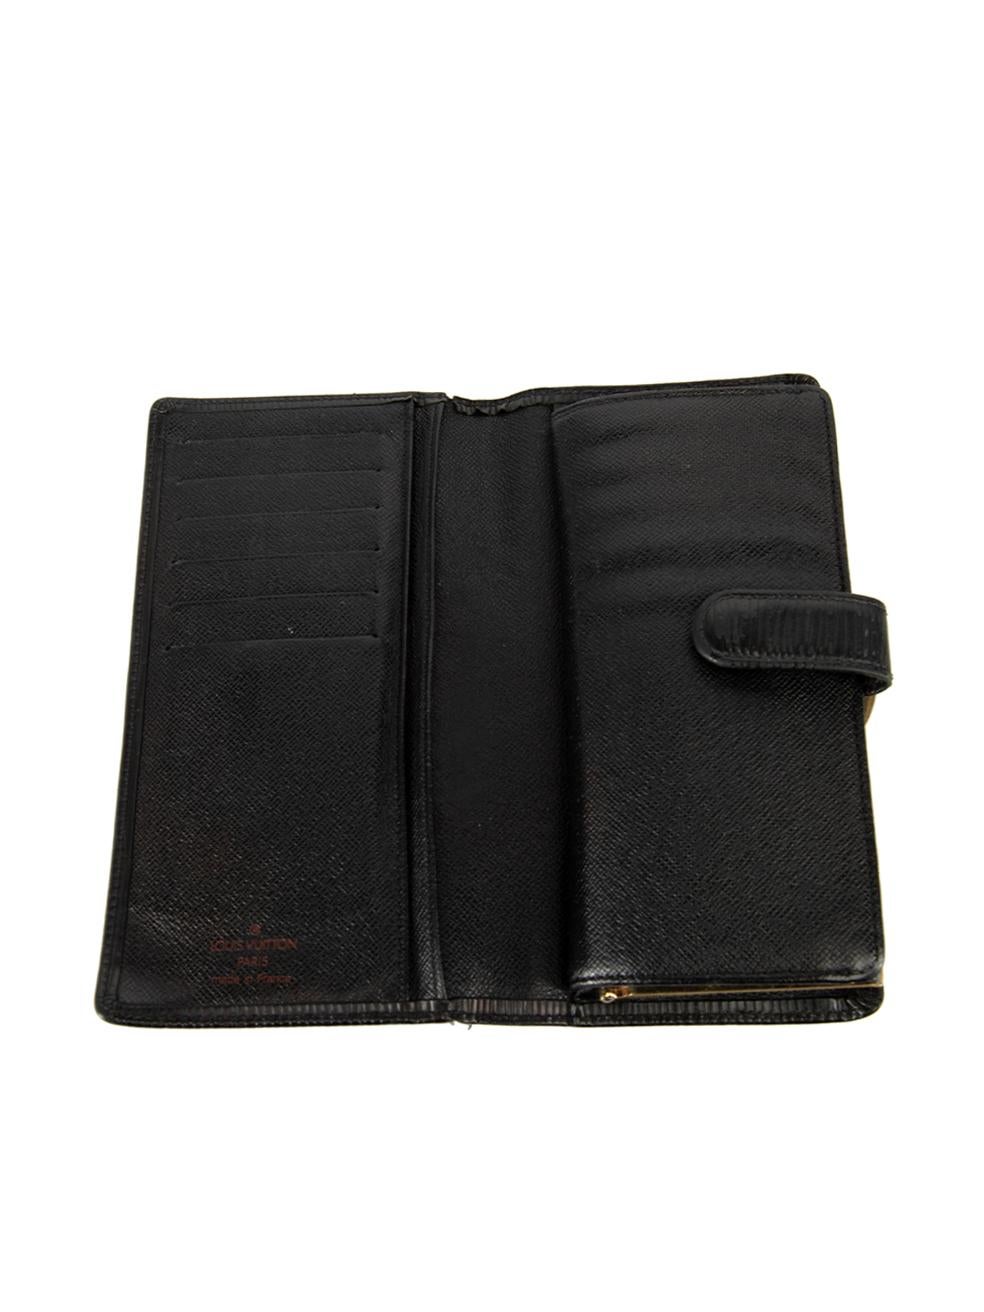 Louis Vuitton Women's Black Epi Leather French Purse Wallet 2